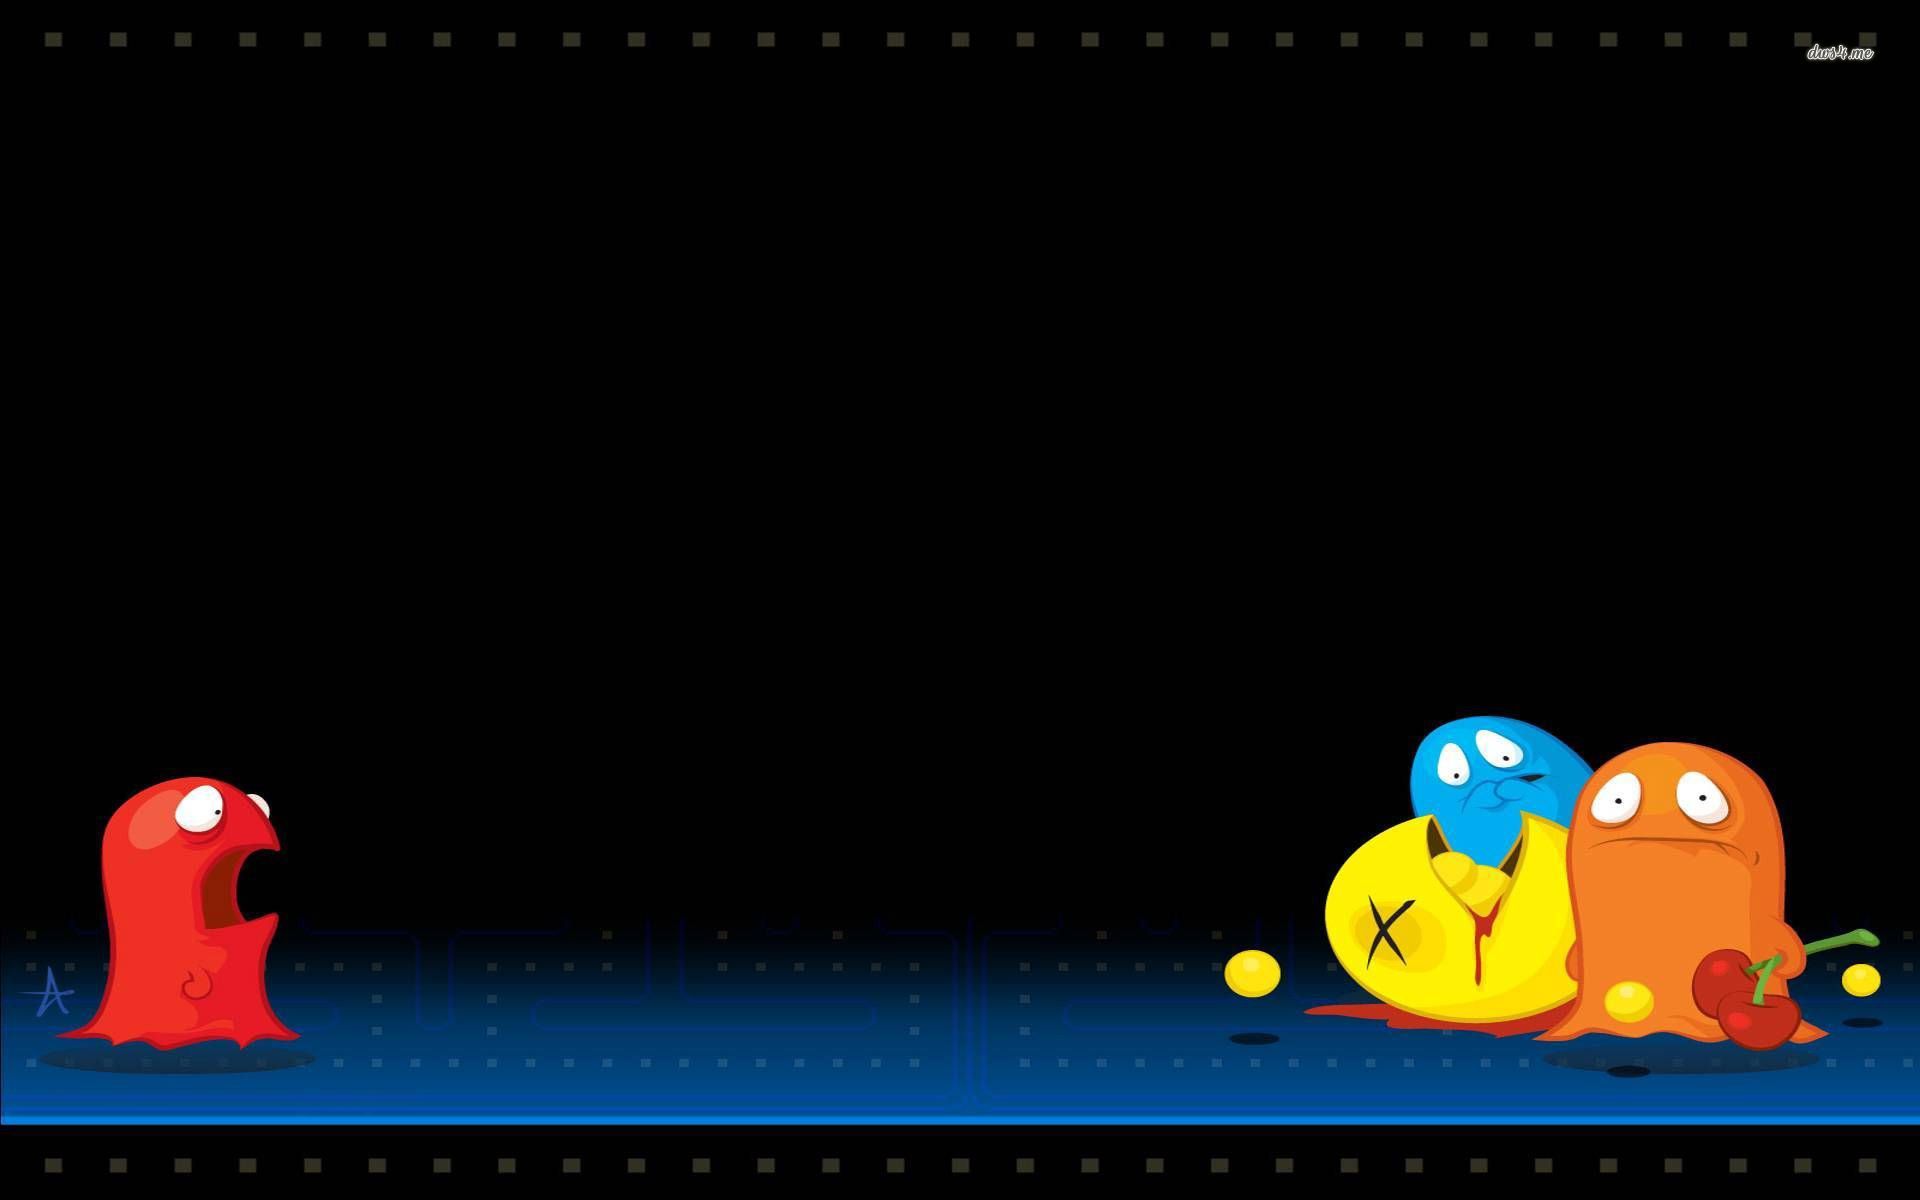 Pac-Man wallpaper - Funny wallpapers - #27188